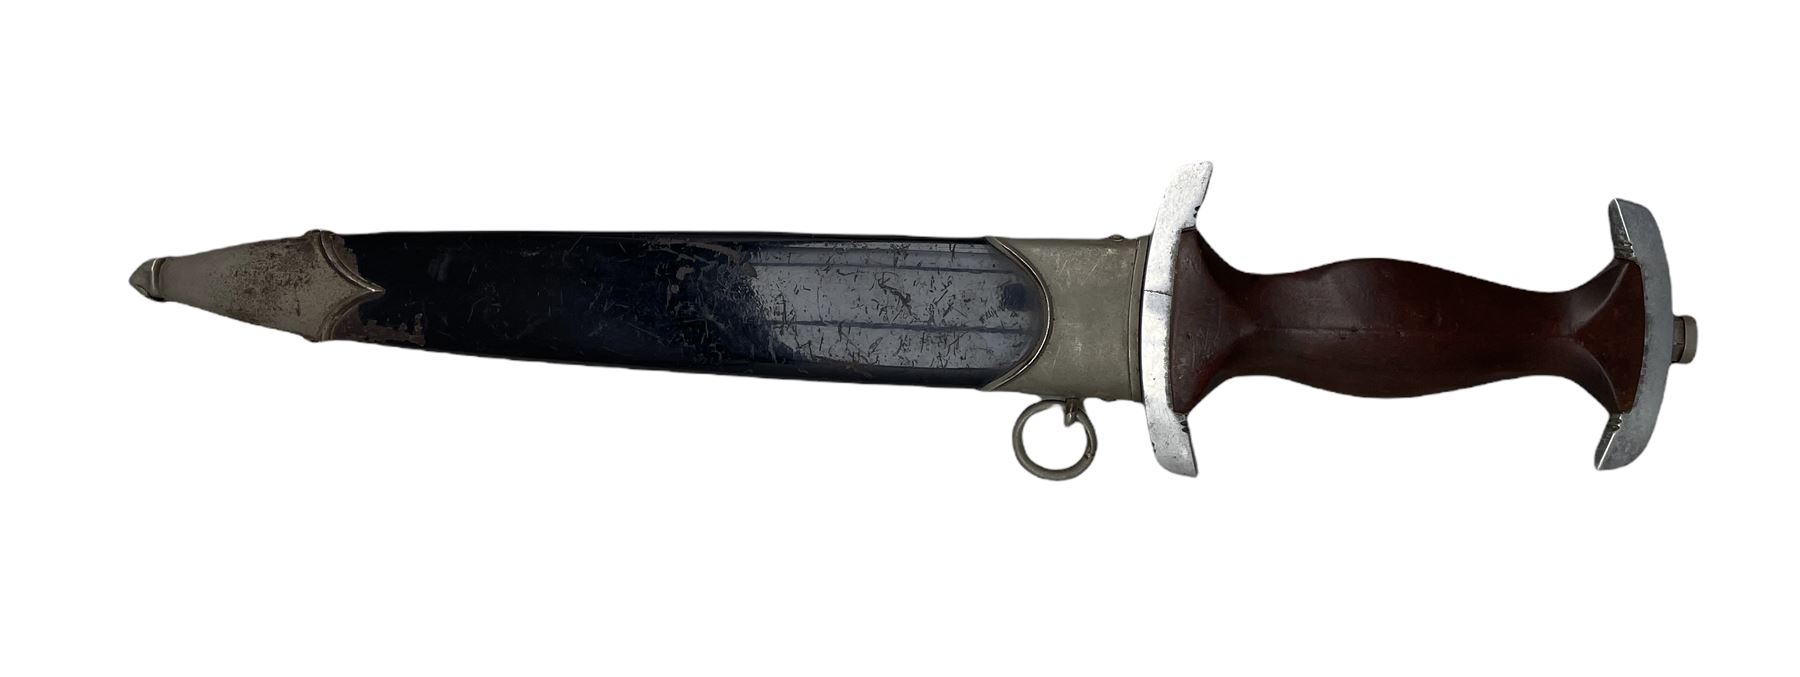 German Third Reich SA dagger - Image 2 of 5